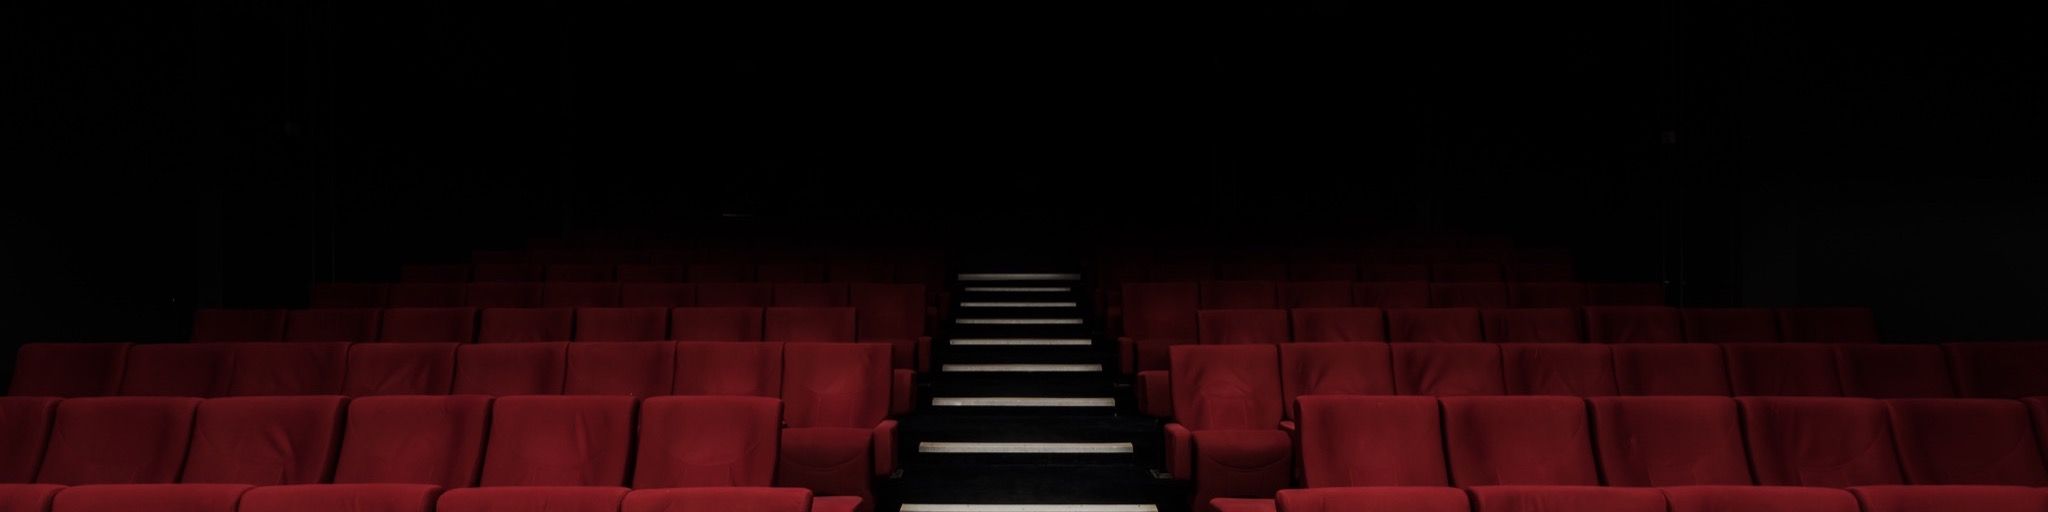 Empty cinema chairs